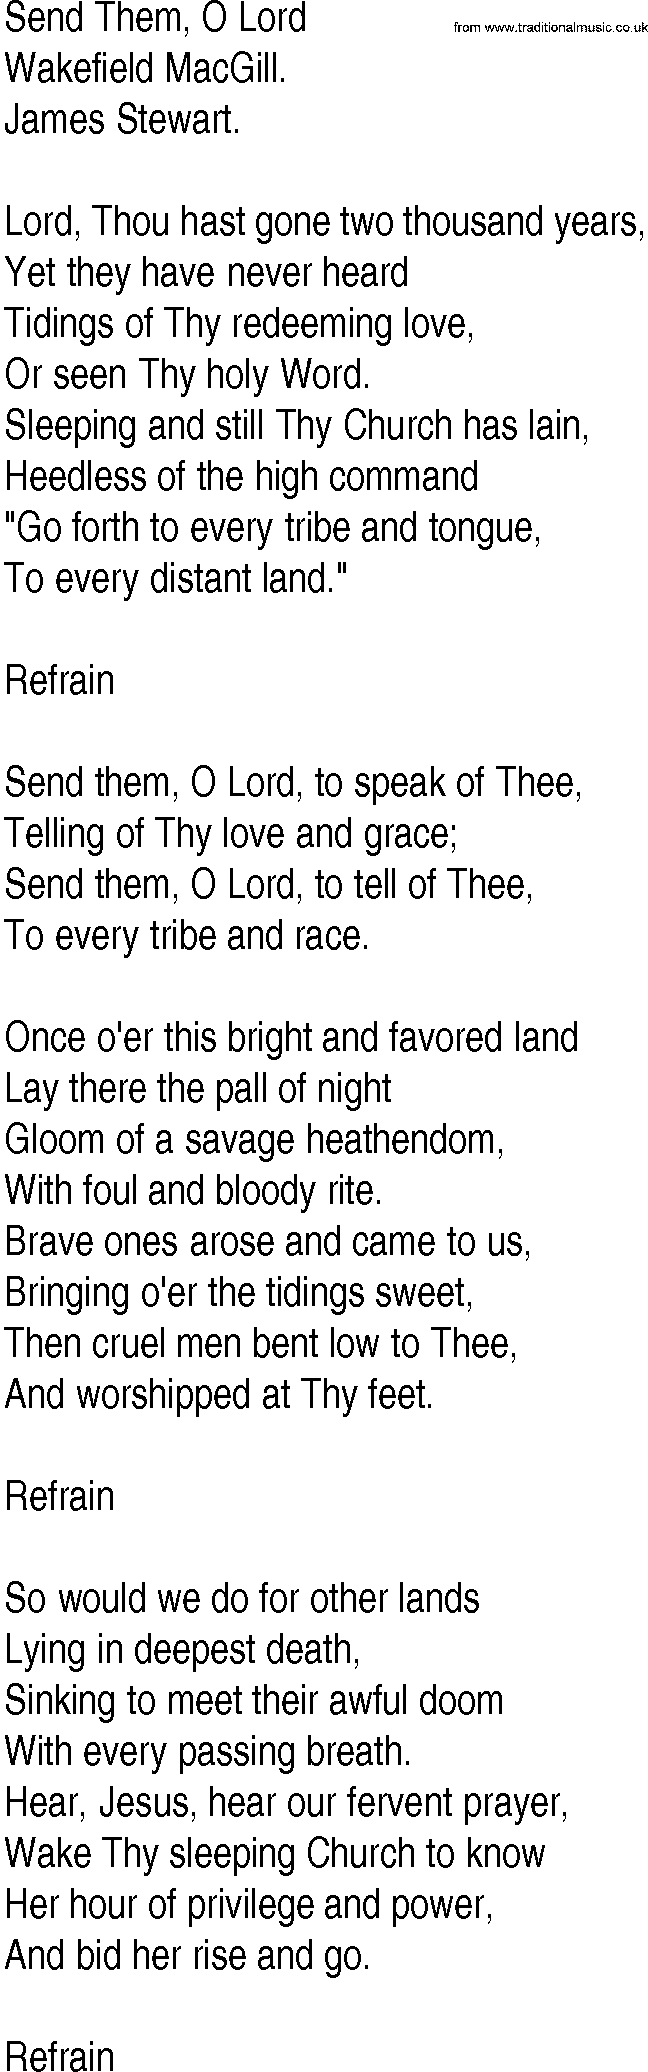 Hymn and Gospel Song: Send Them, O Lord by Wakefield MacGill lyrics